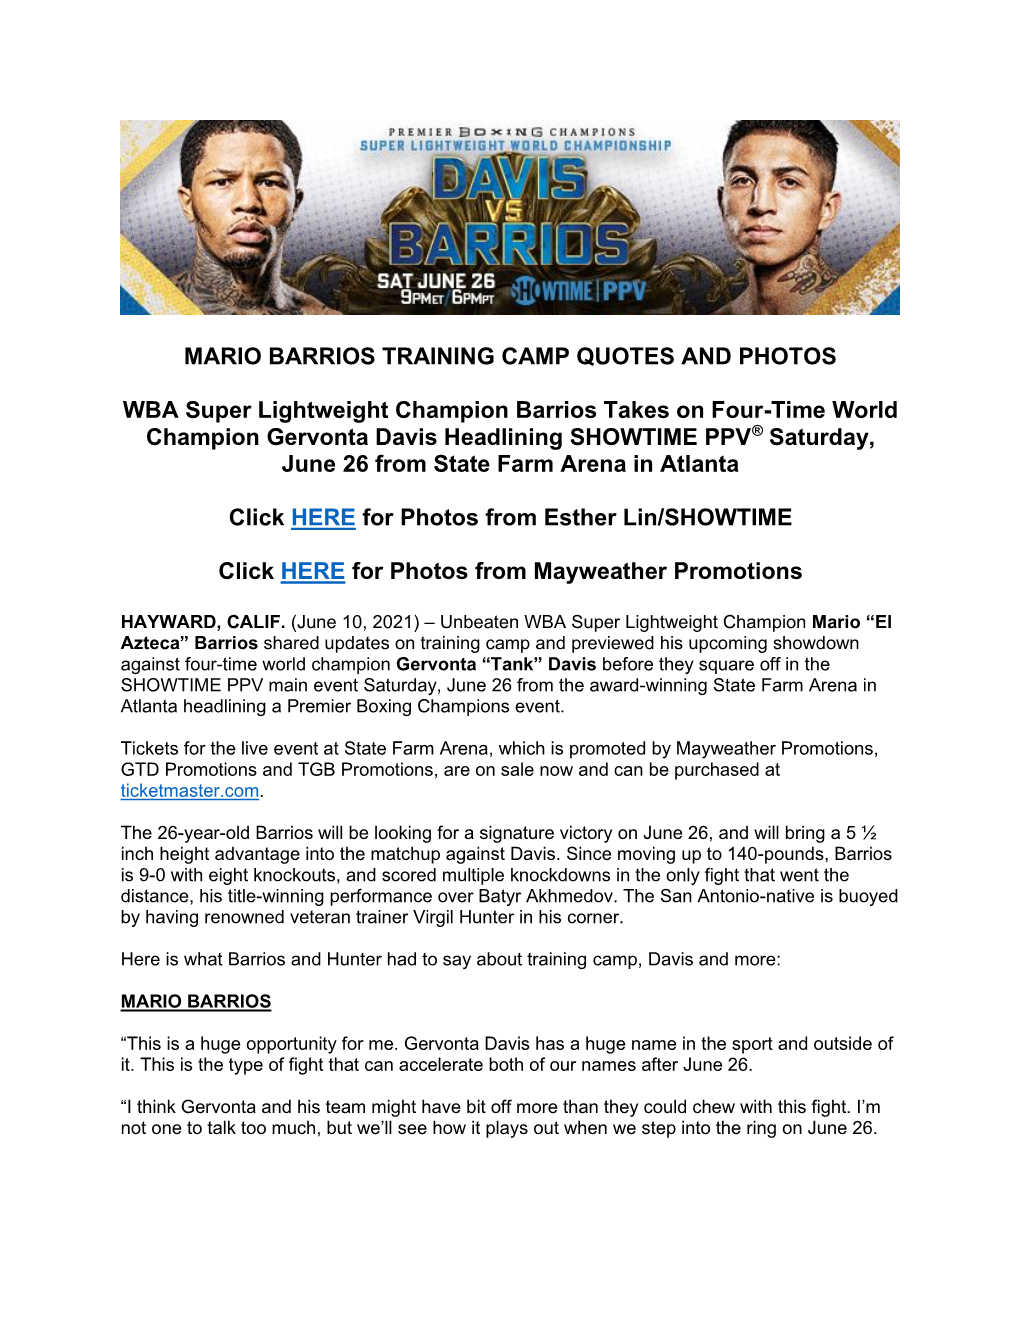 Mario Barrios Training Camp Quotes and Photos